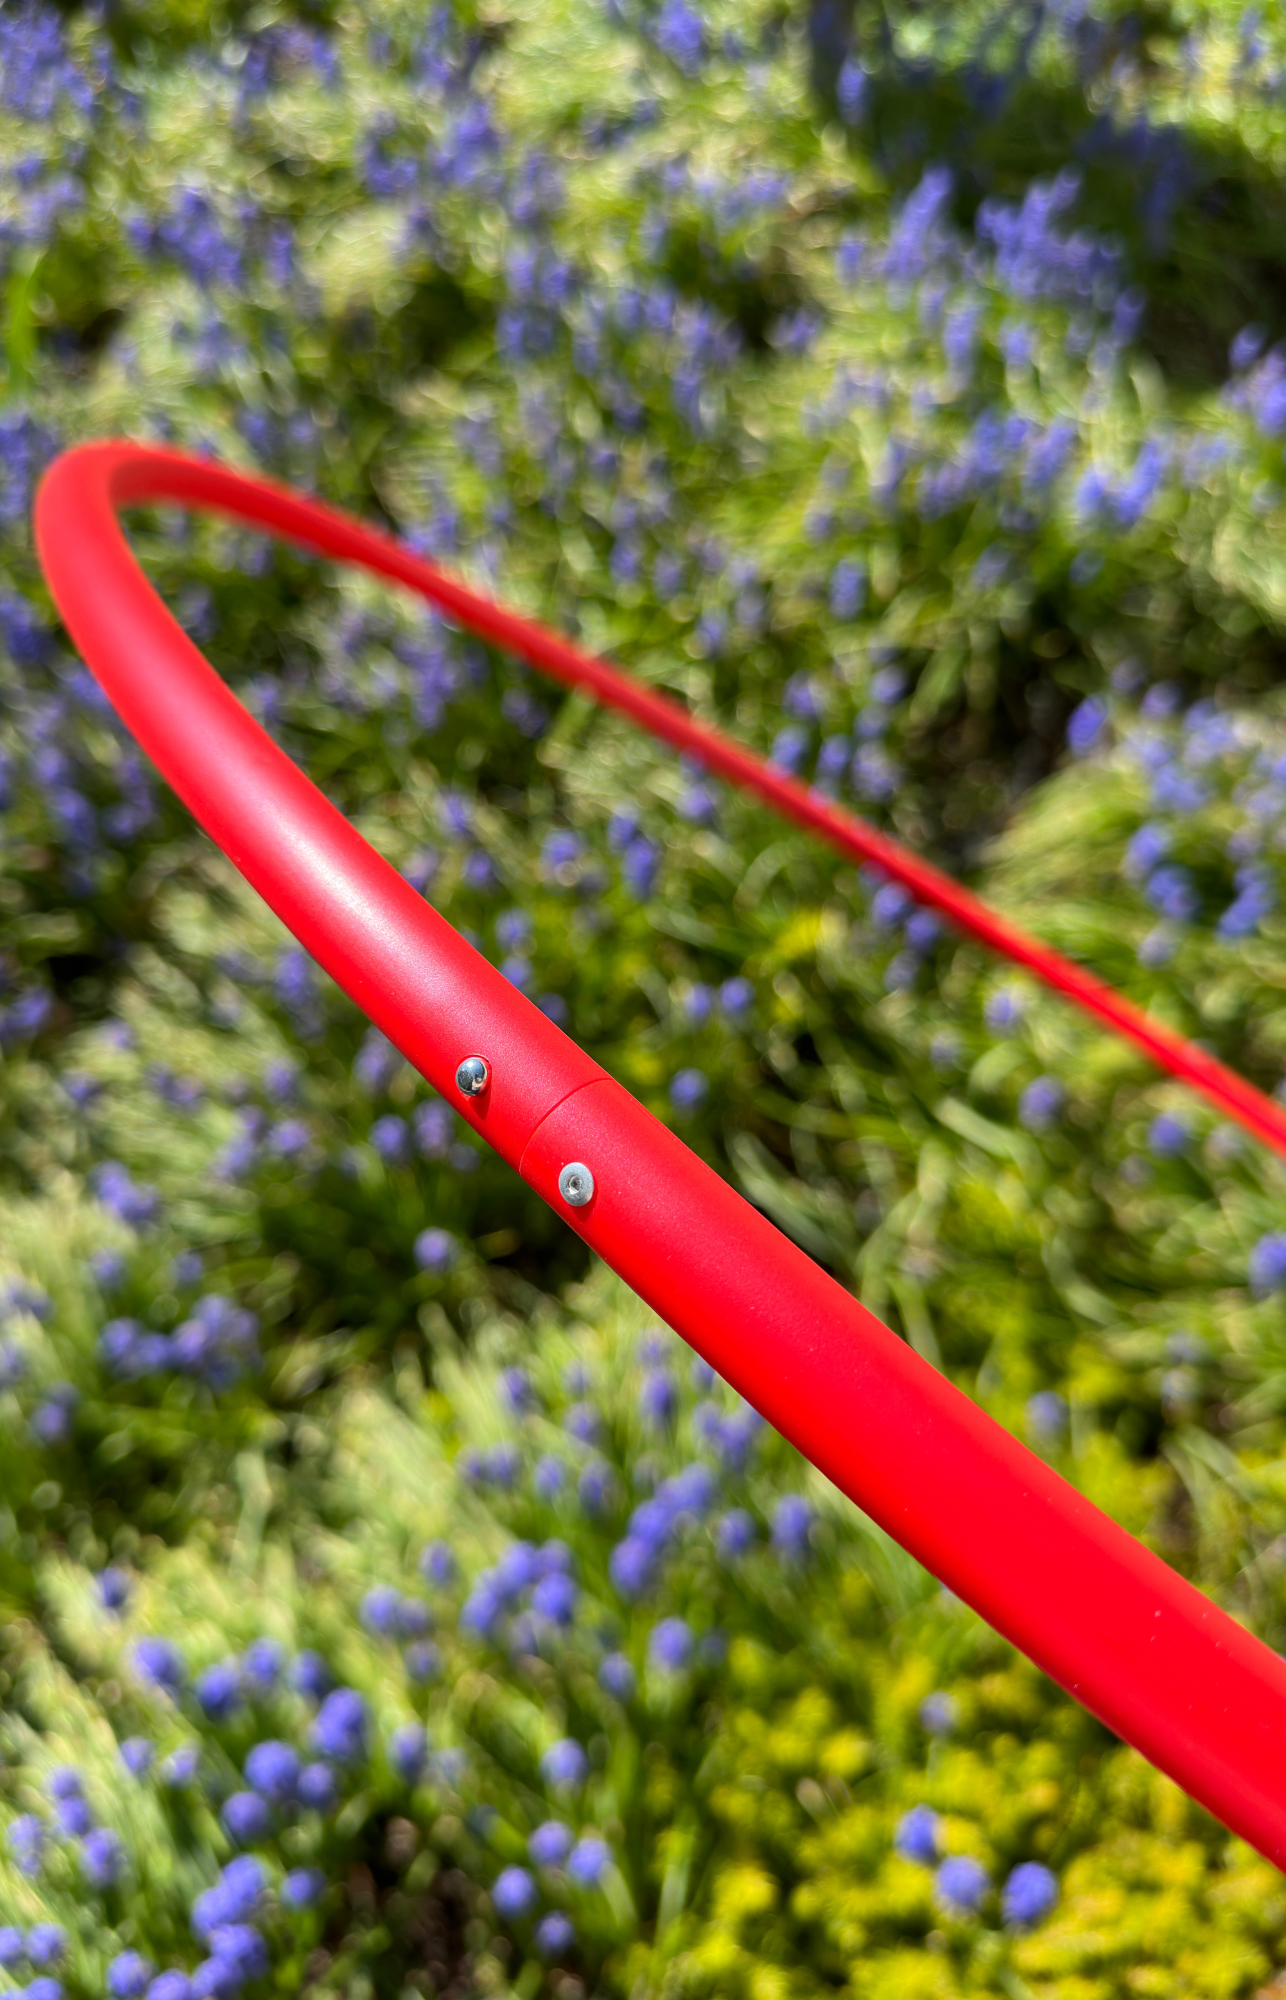 5/8 Ferrari Red Metallic Colored Polypro Hoops